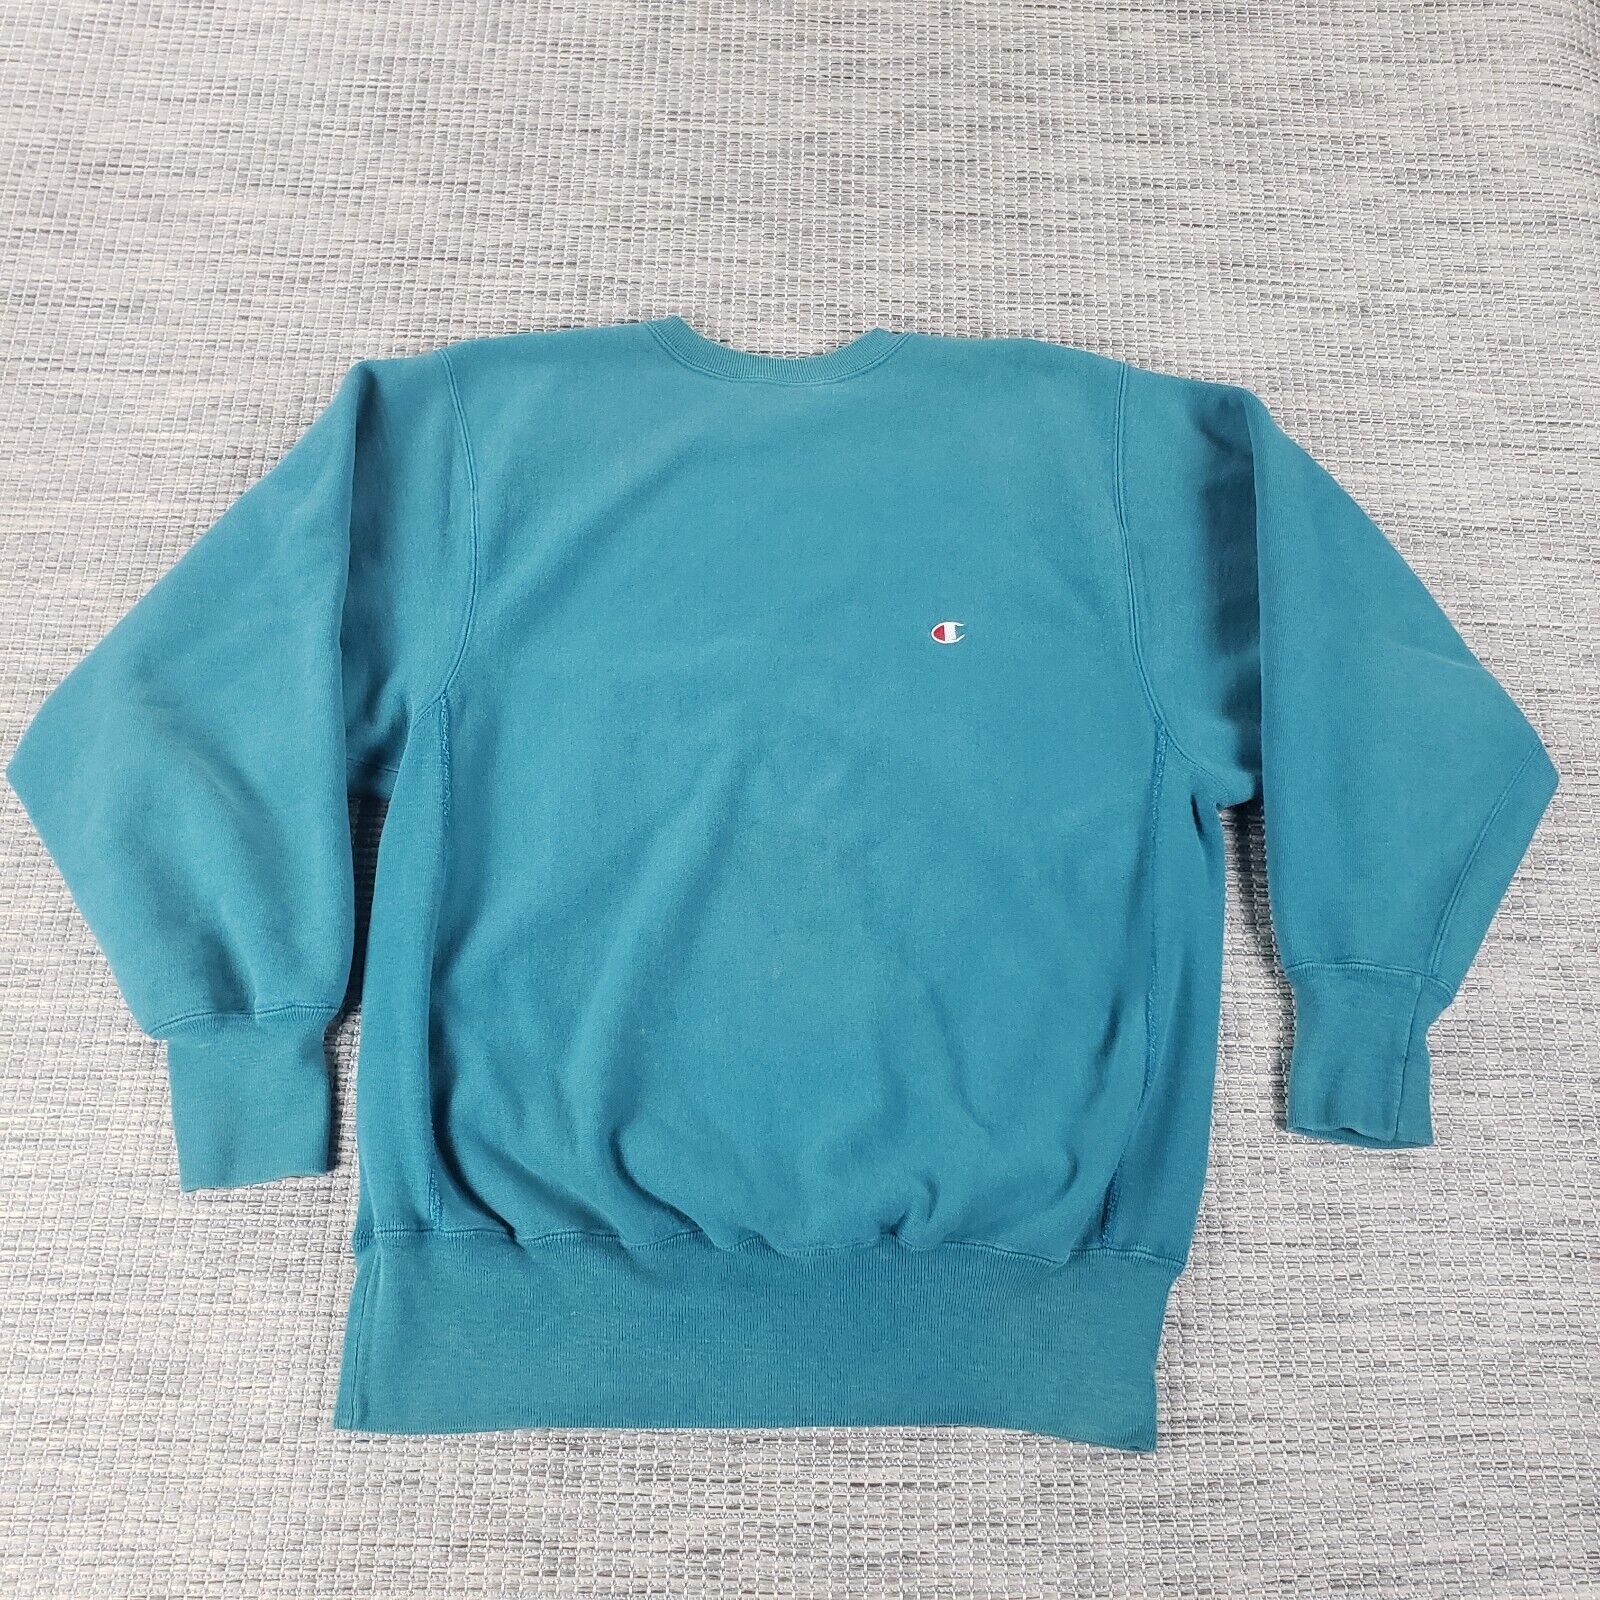 Vtg 80s CHAMPION Green Blue Reverse Weave Sweatshirt Shirt Athletic Phys Ed XL